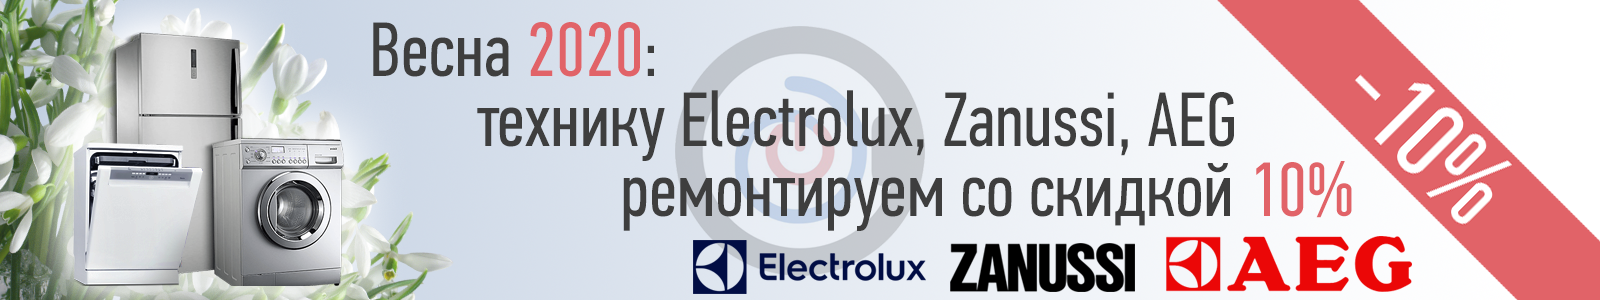 Акция весной 2020: ремонт техники Electrolux, Zanussi, AEG со скидкой 20%